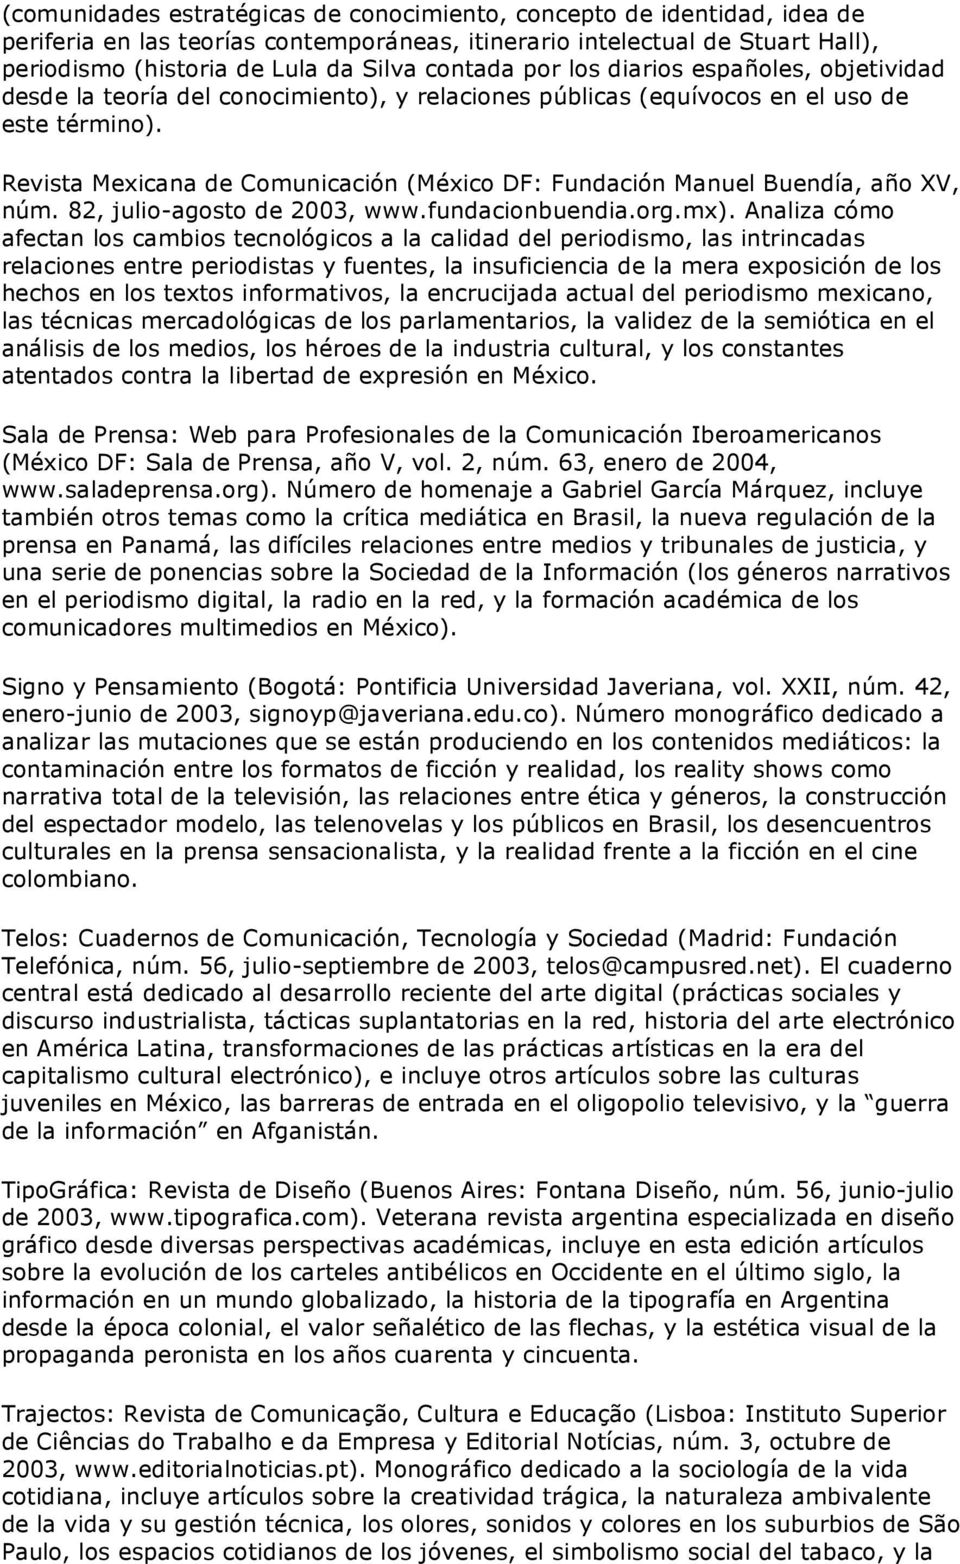 Revista Mexicana de Comunicación (México DF: Fundación Manuel Buendía, año XV, núm. 82, julio-agosto de 2003, www.fundacionbuendia.org.mx).